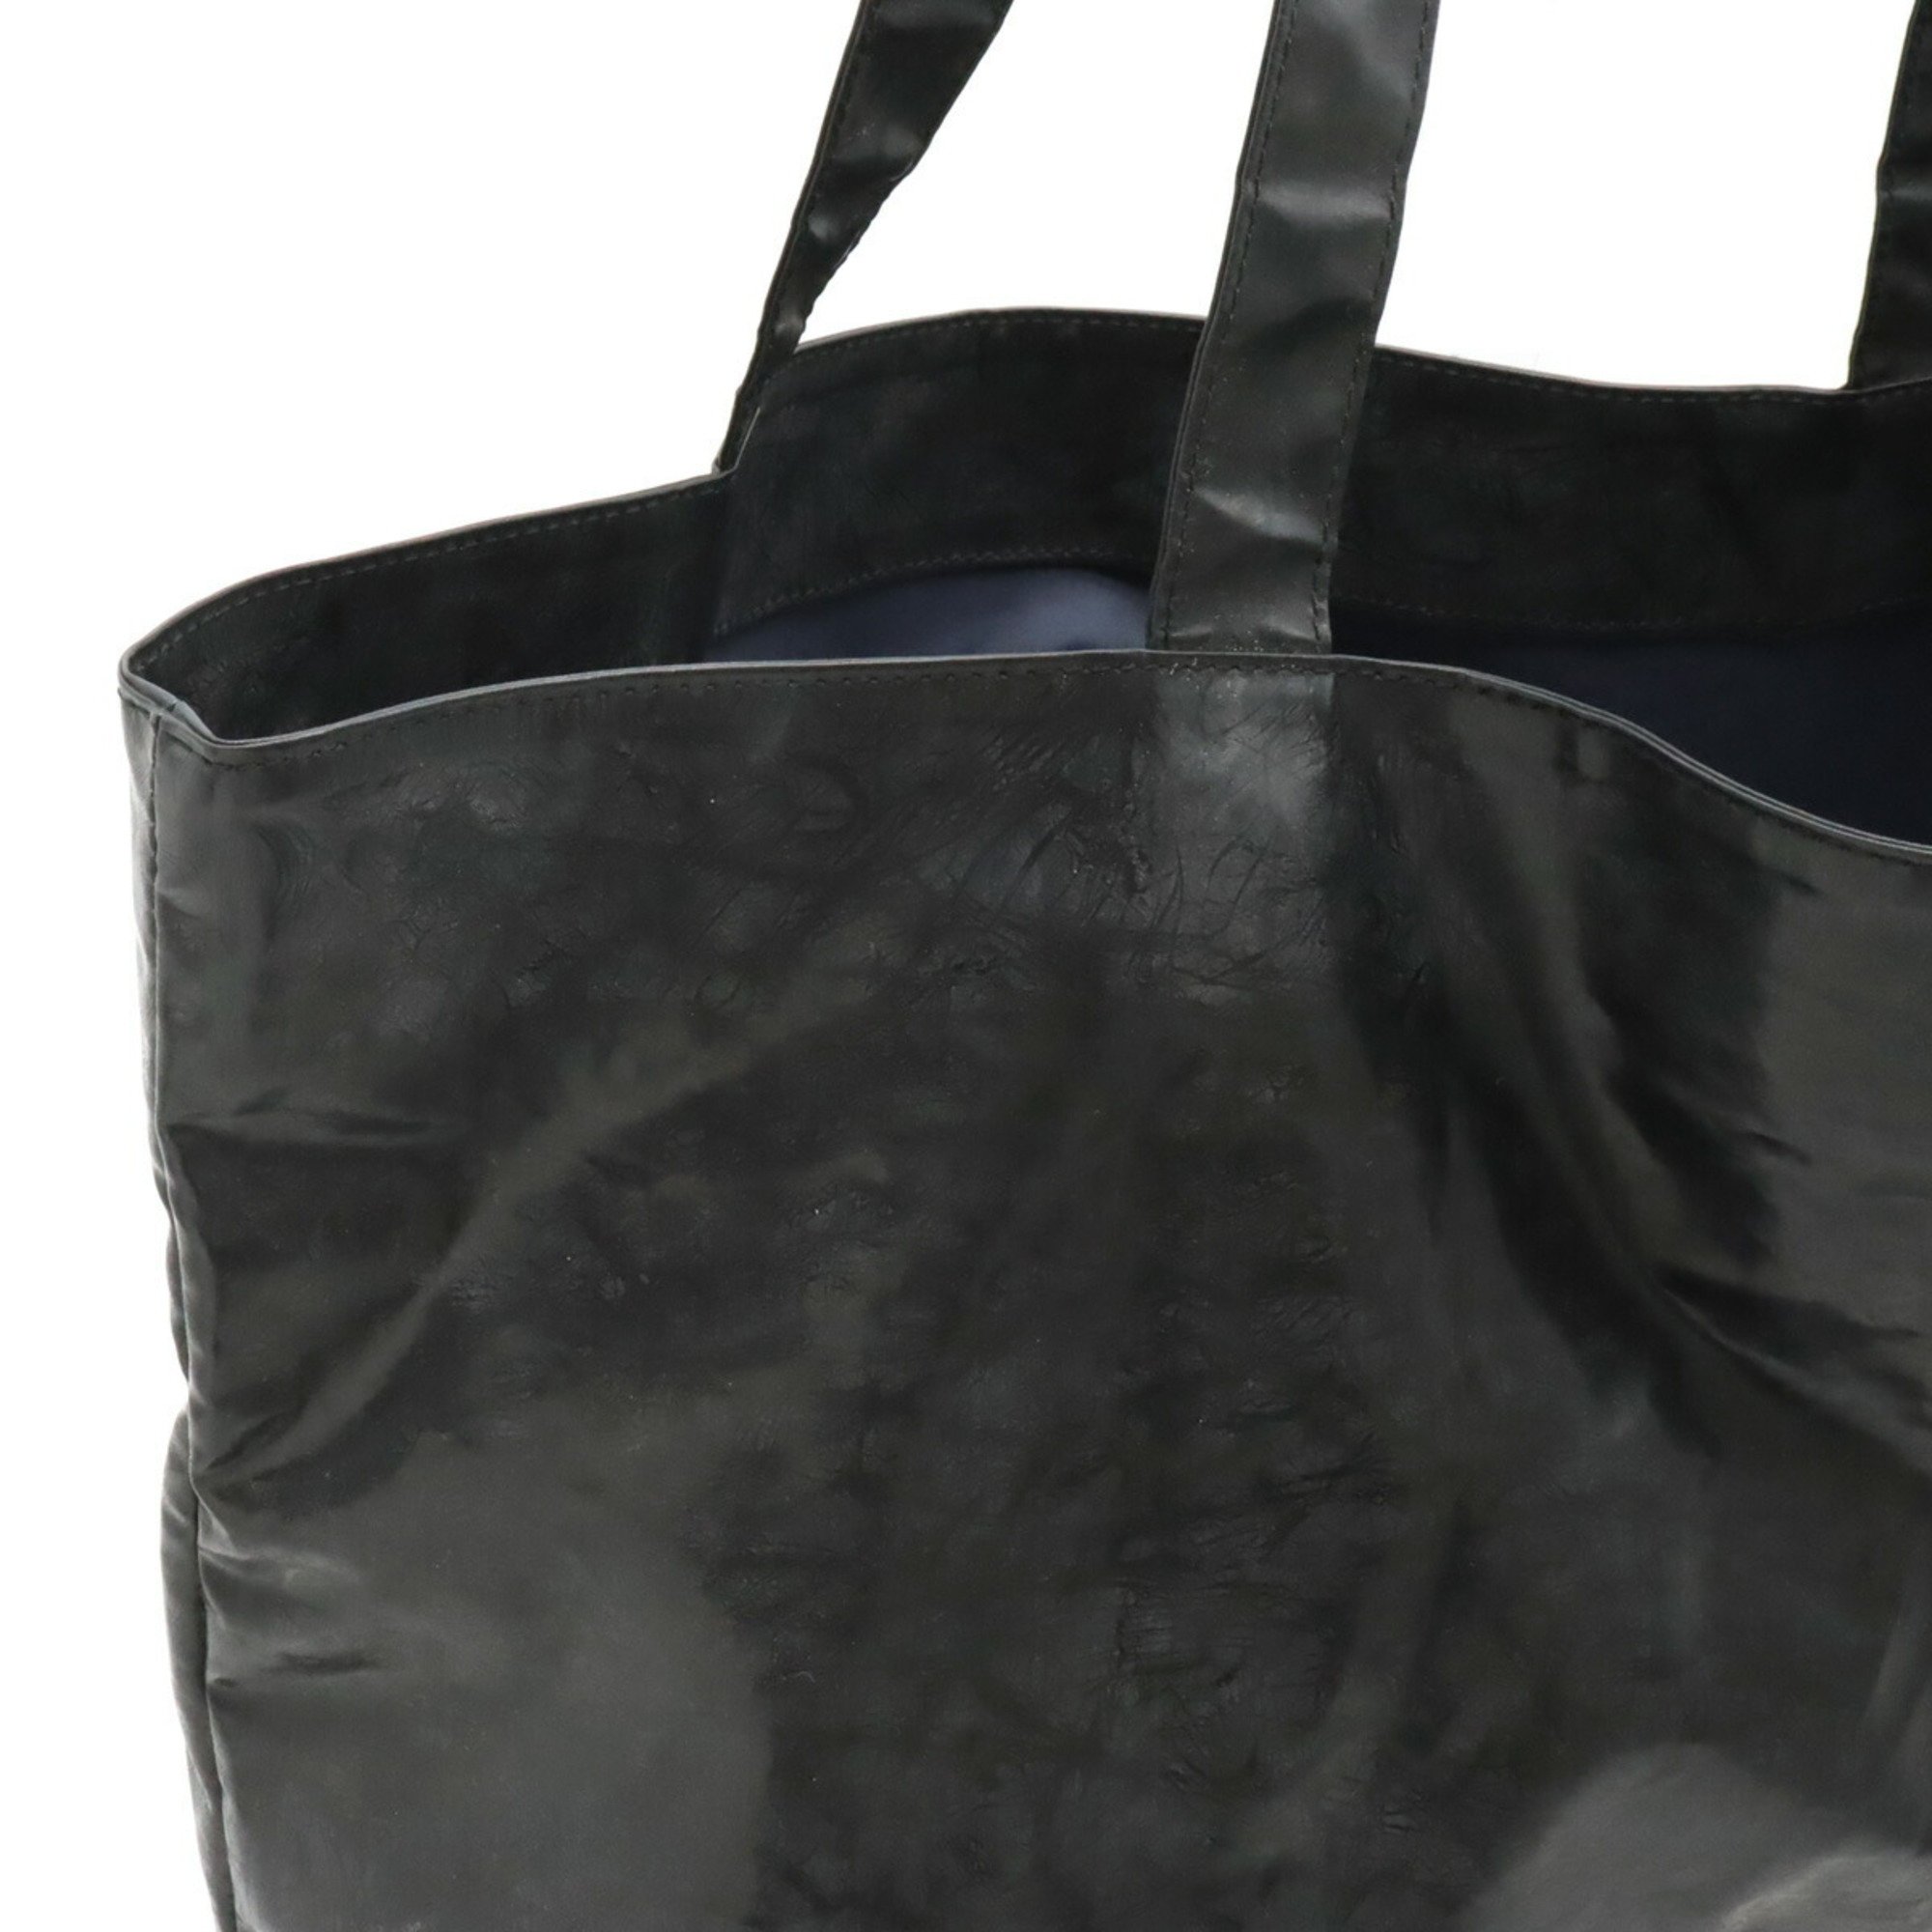 CHANEL Coco Mark Tote Bag Large Shoulder Patent Leather Black